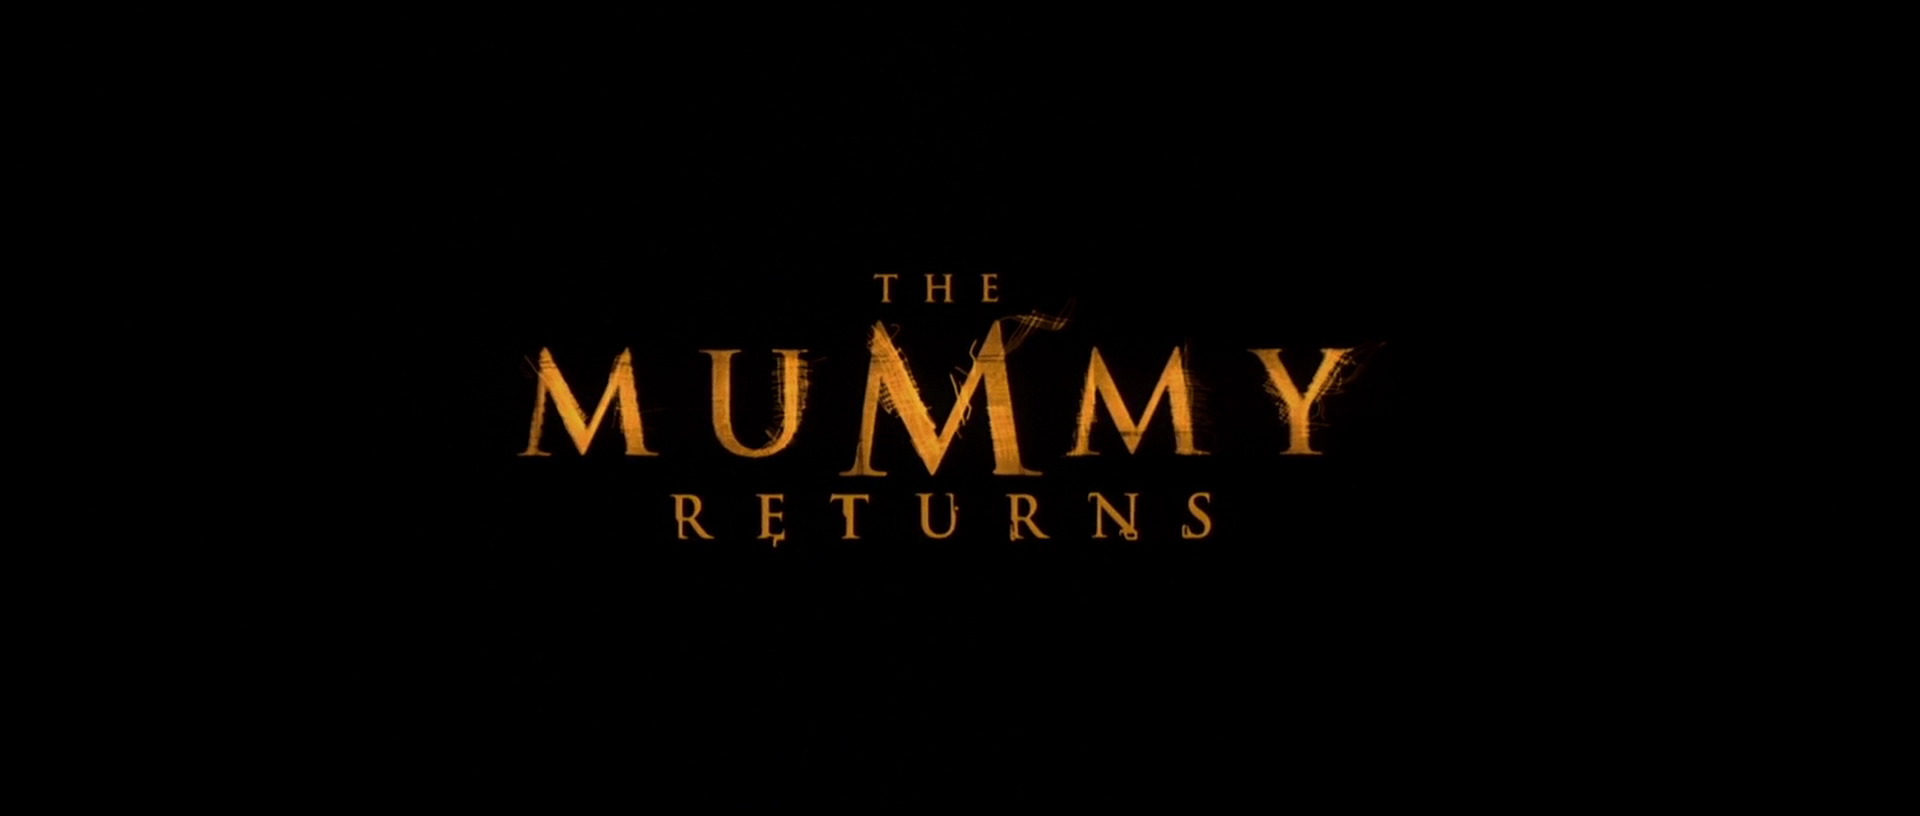 The Mummy Returns #3